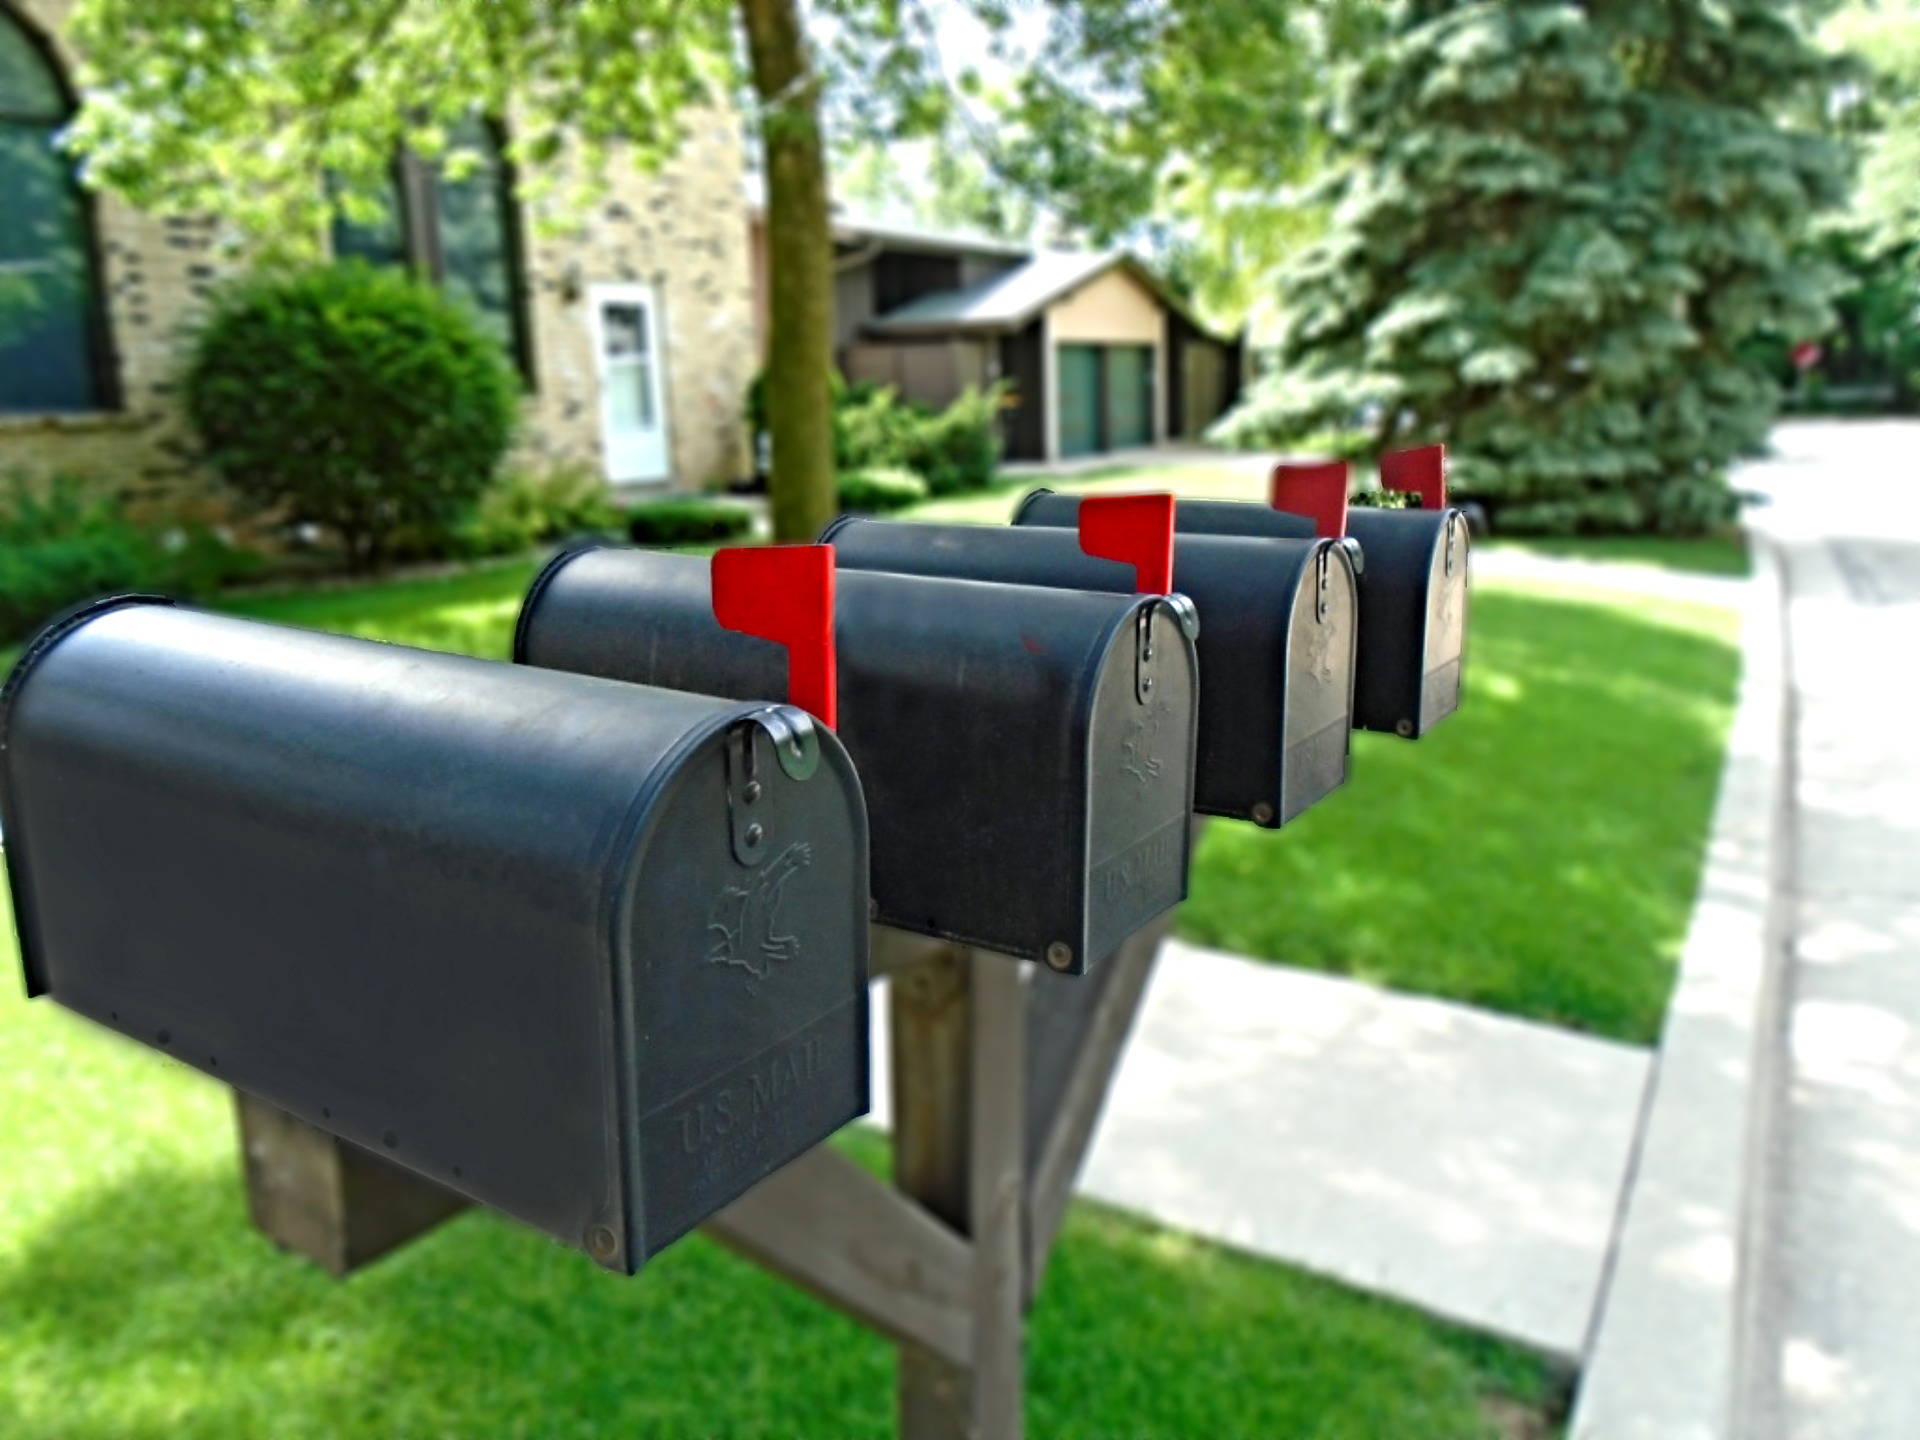 modern mailboxes in neighborhood